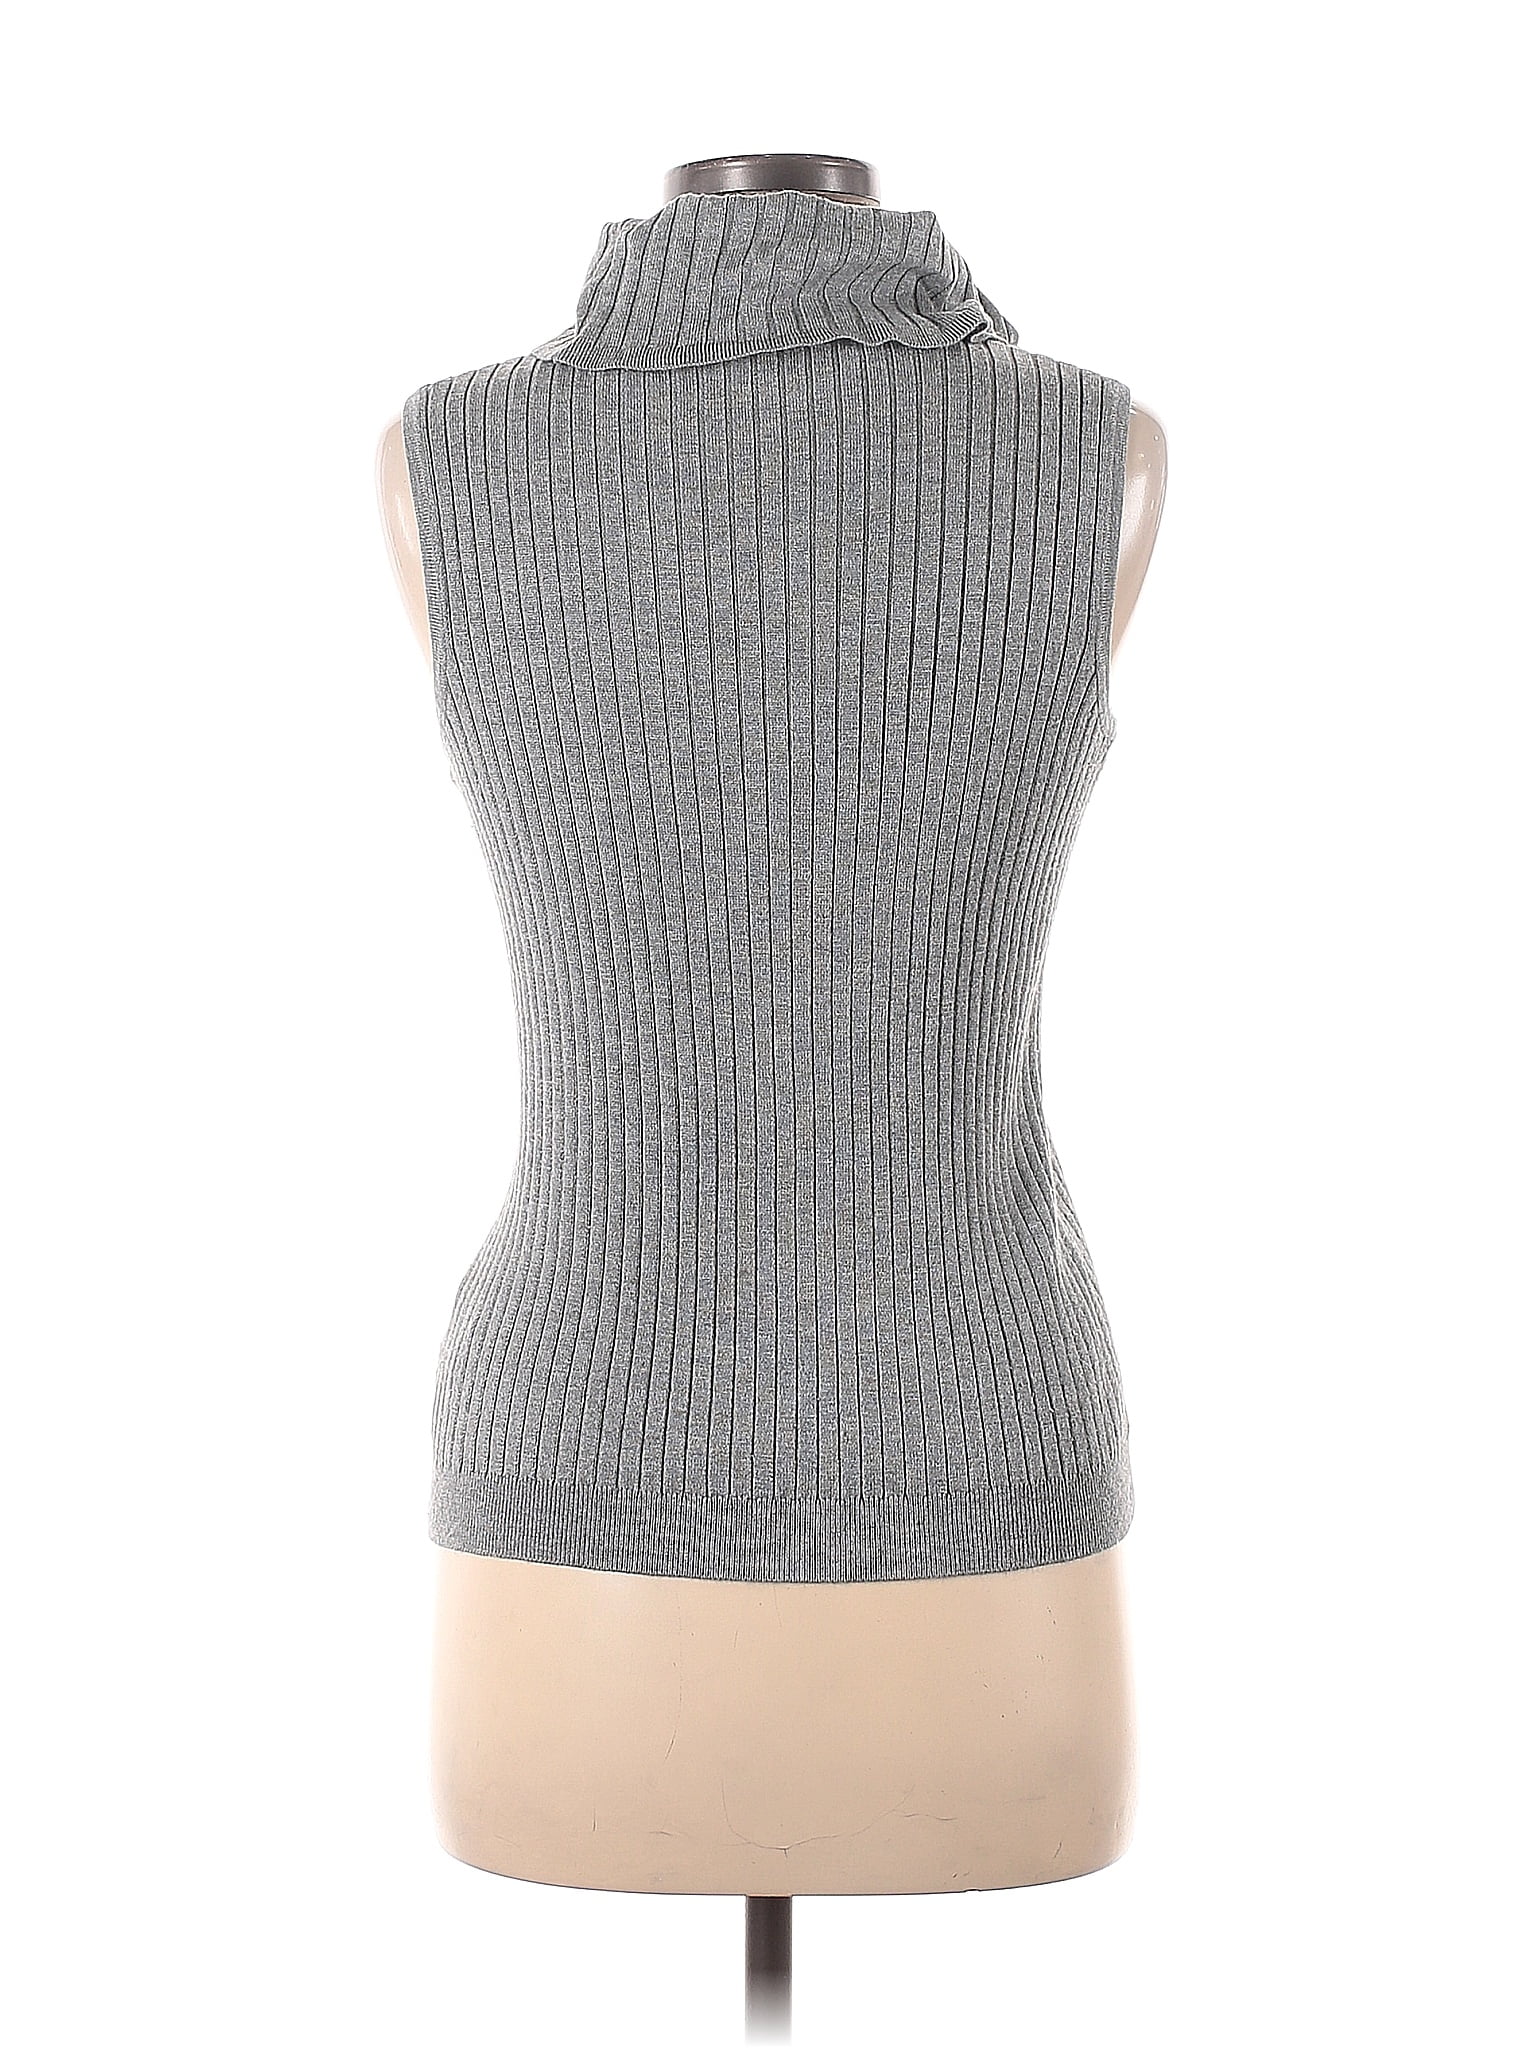 Cable & Gauge Color Block Solid Gray Turtleneck Sweater Size M (Petite) -  55% off